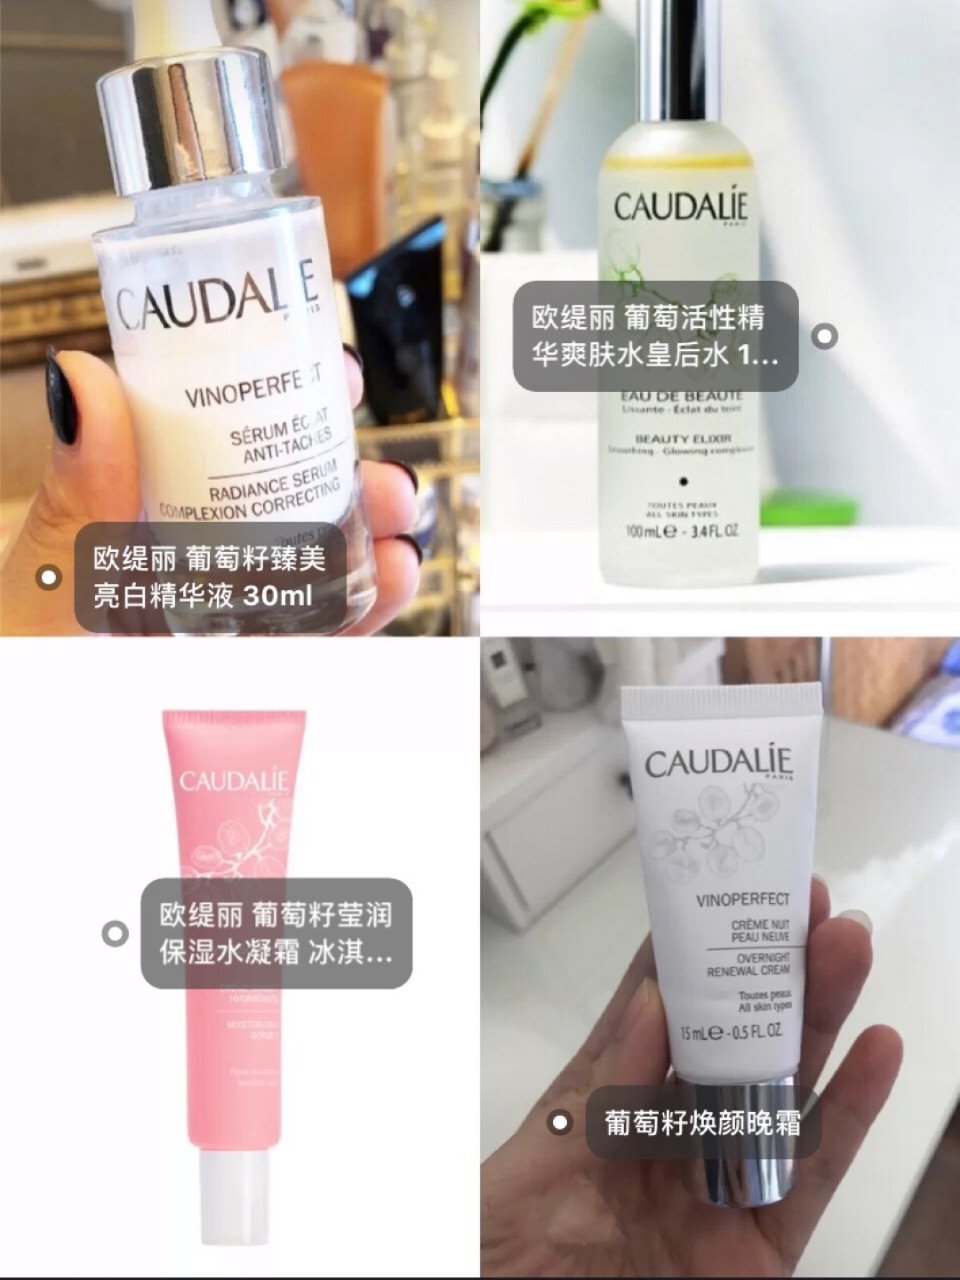 Beauty Elixir Face Mist - Caudalie | Sephora